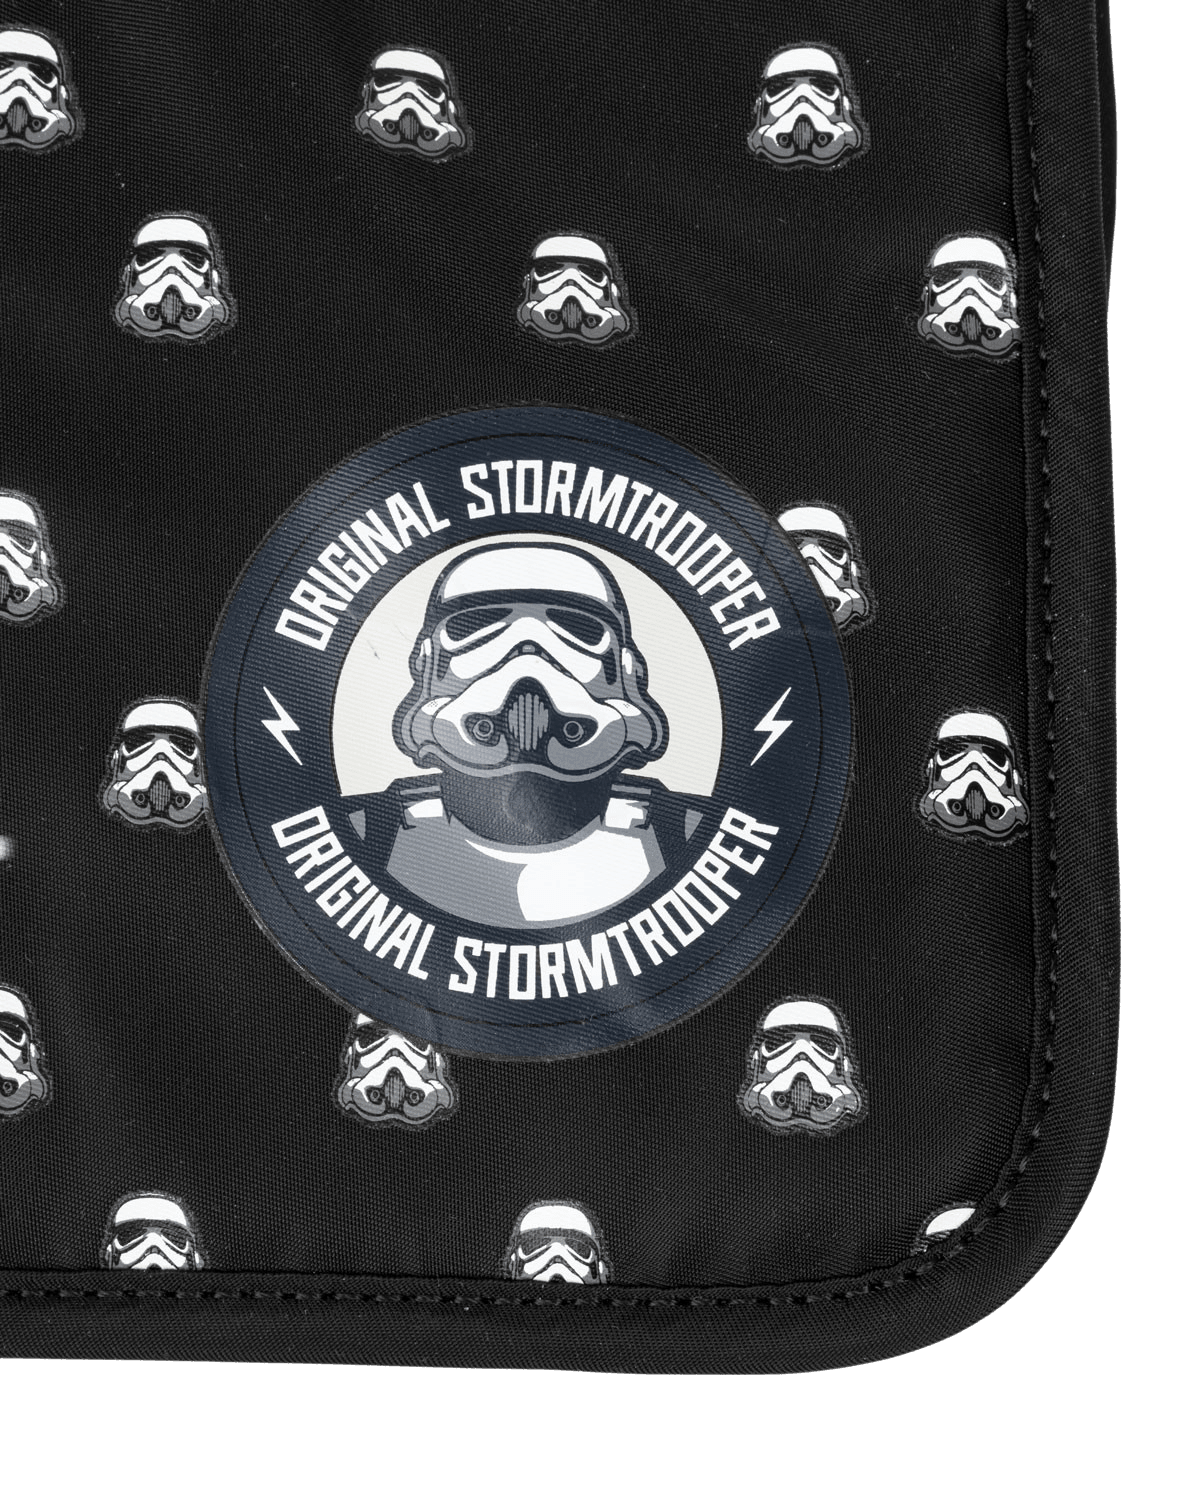 ItemLab - Star Wars - Original Stormtrooper Helmet Pattern Man Purse - The Card Vault